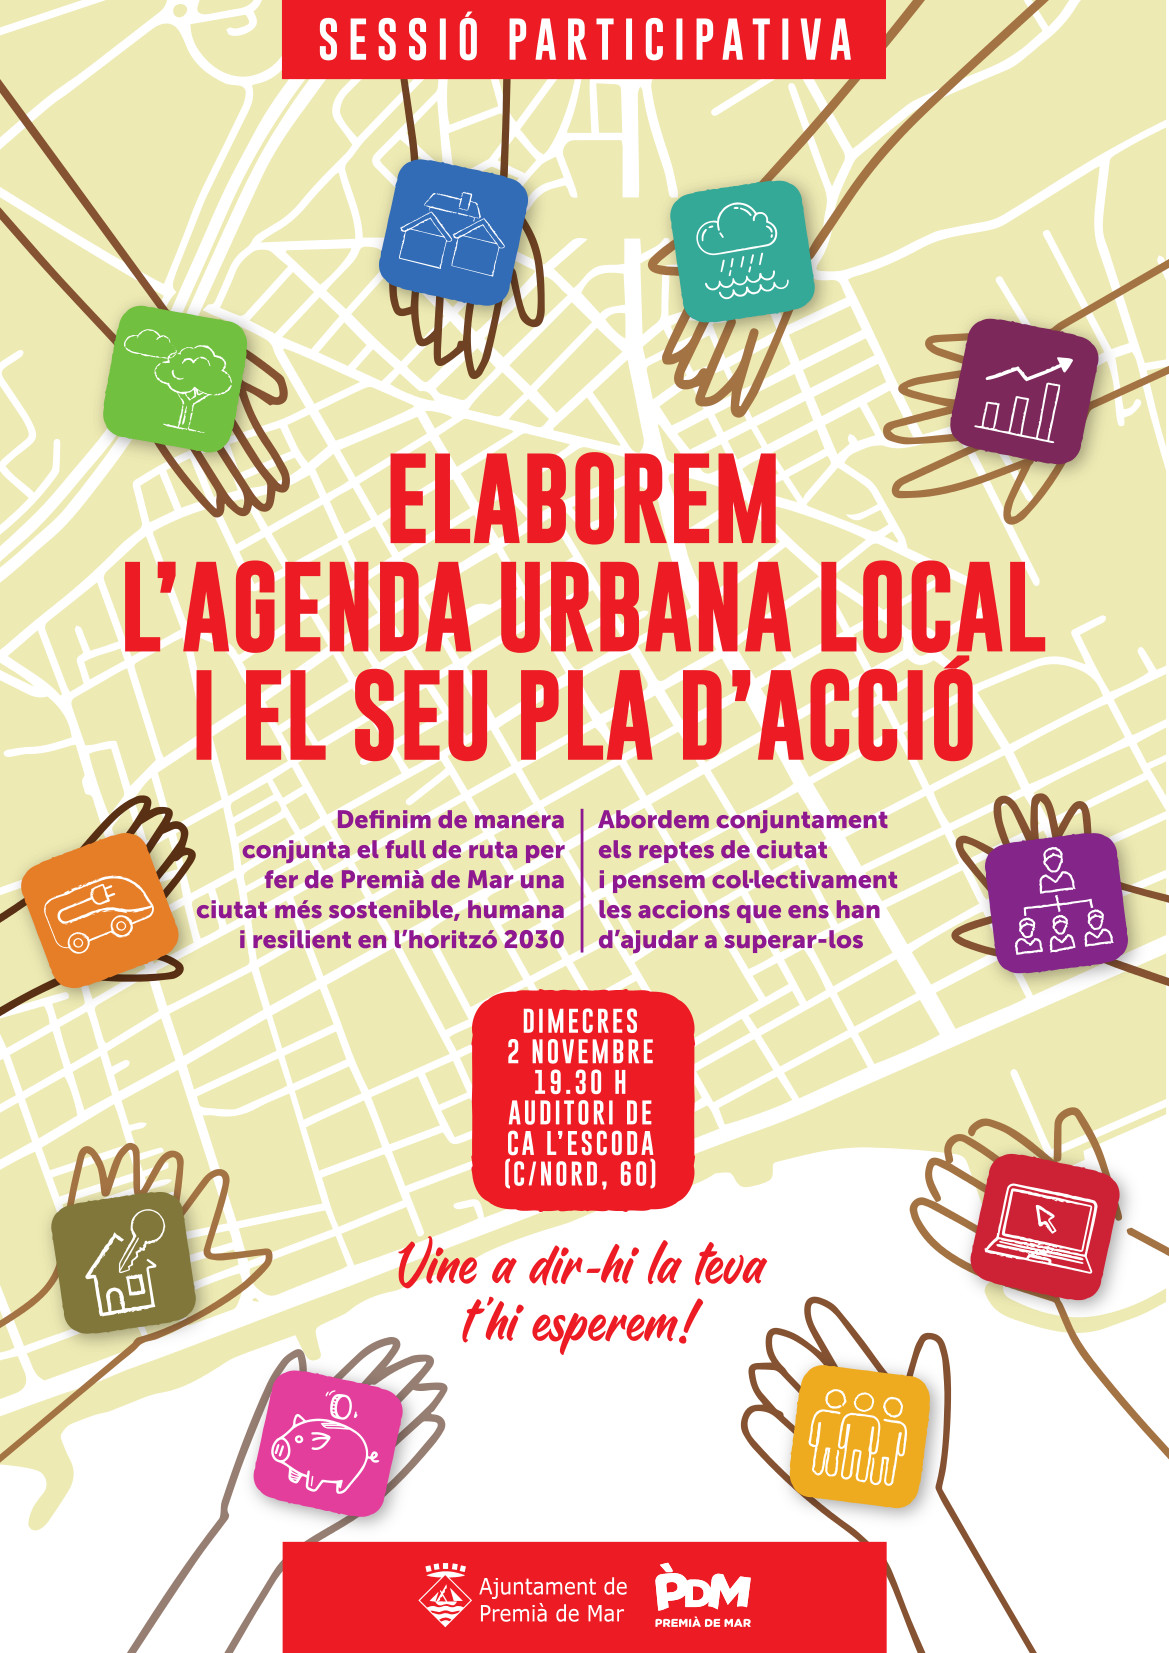 Jornada participativa Agenda urbana